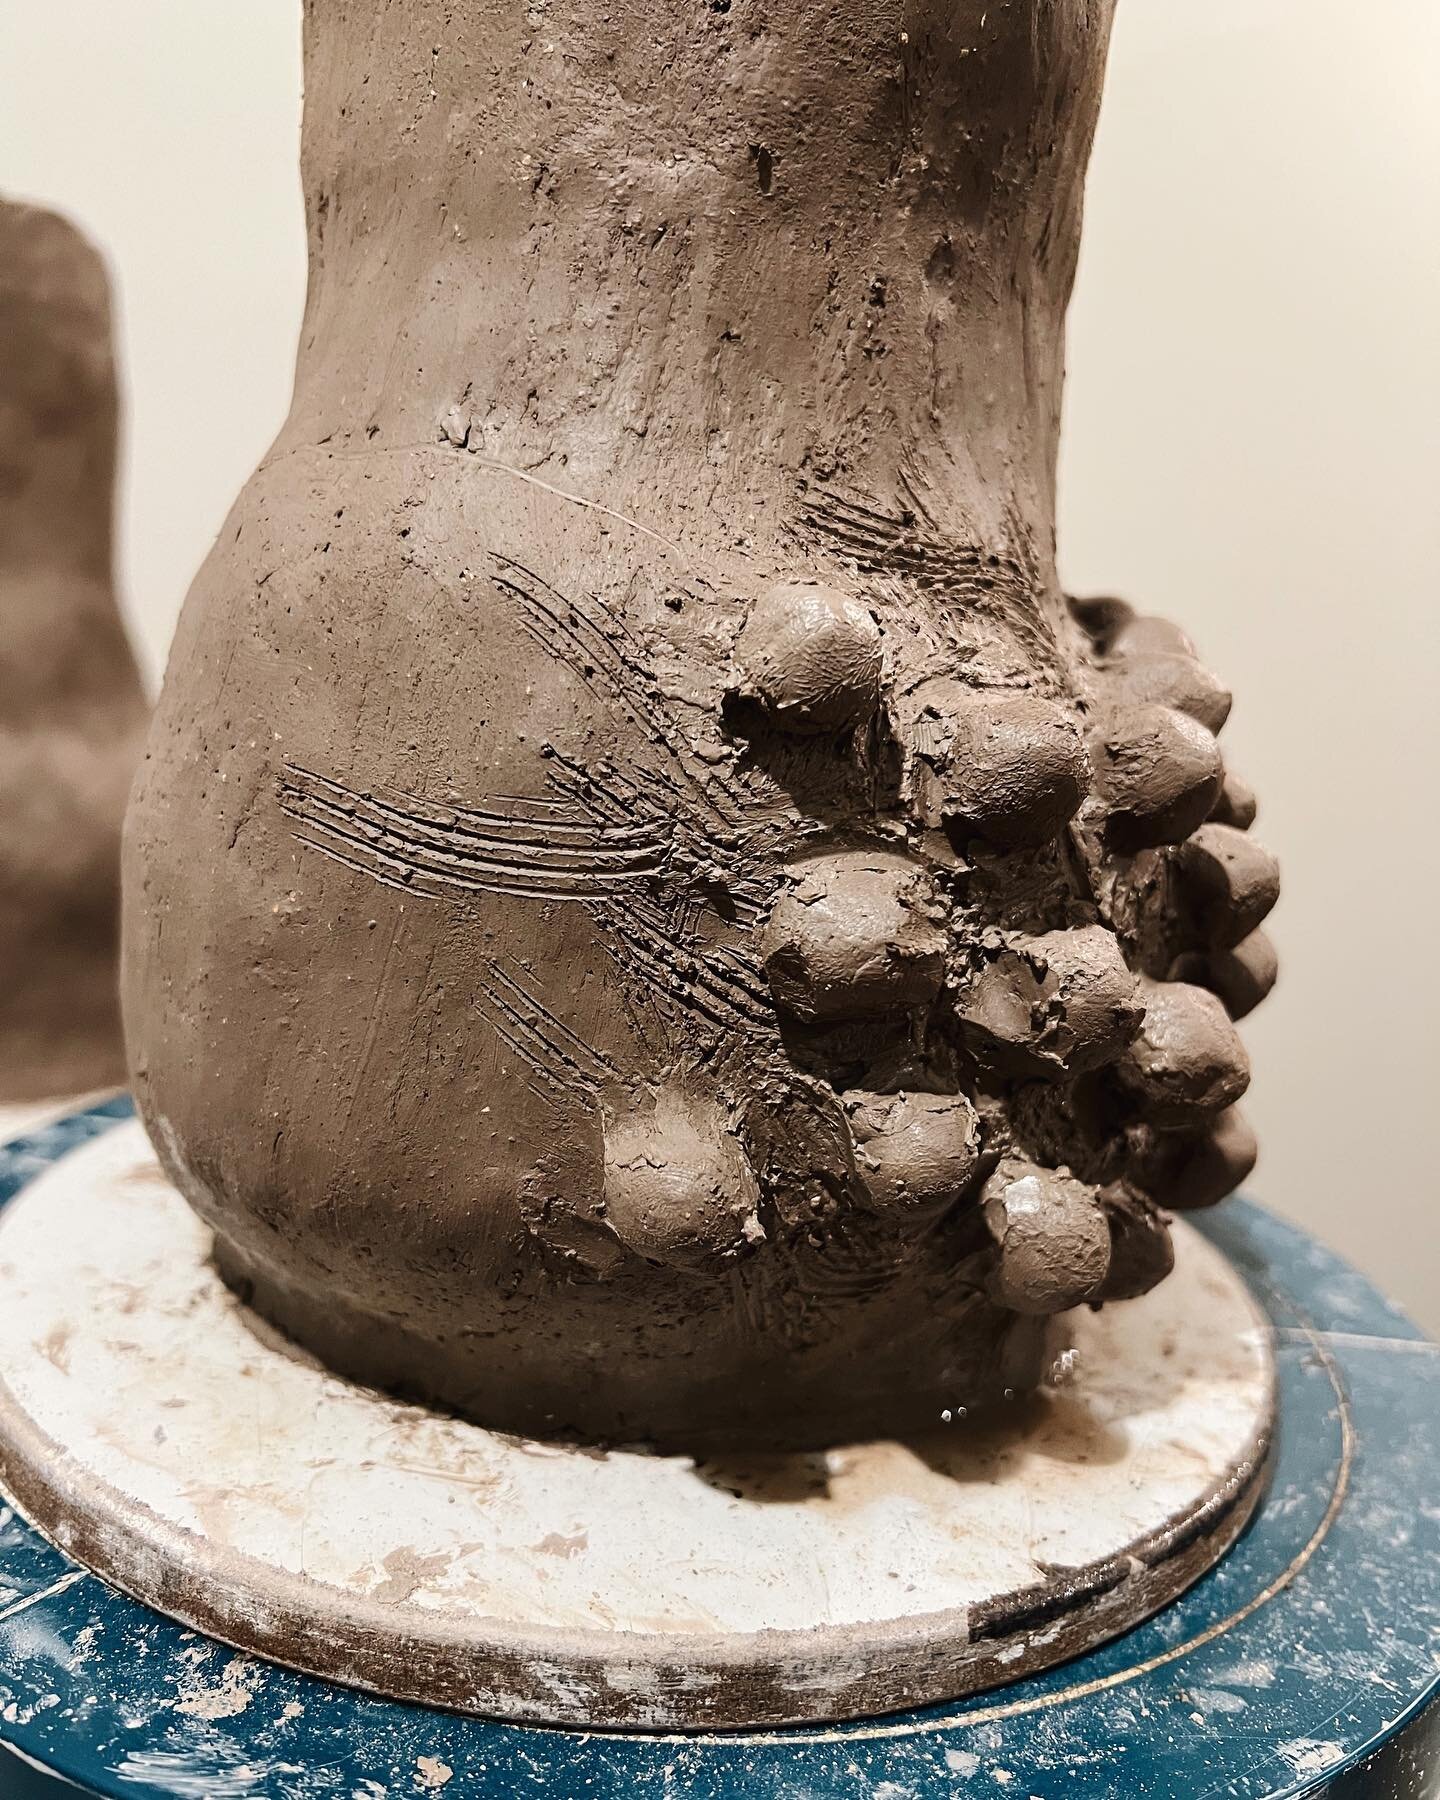 Scratching up dark stoneware. Hand formed vessel in progress
.
.
.
#clay #cremerging #australianartist #stoneware #sculpture #emergingartist #keramik #femaleartist #ceramicsaustralia #australianceramics #vessel #vase #object #ceramiclicious #handform